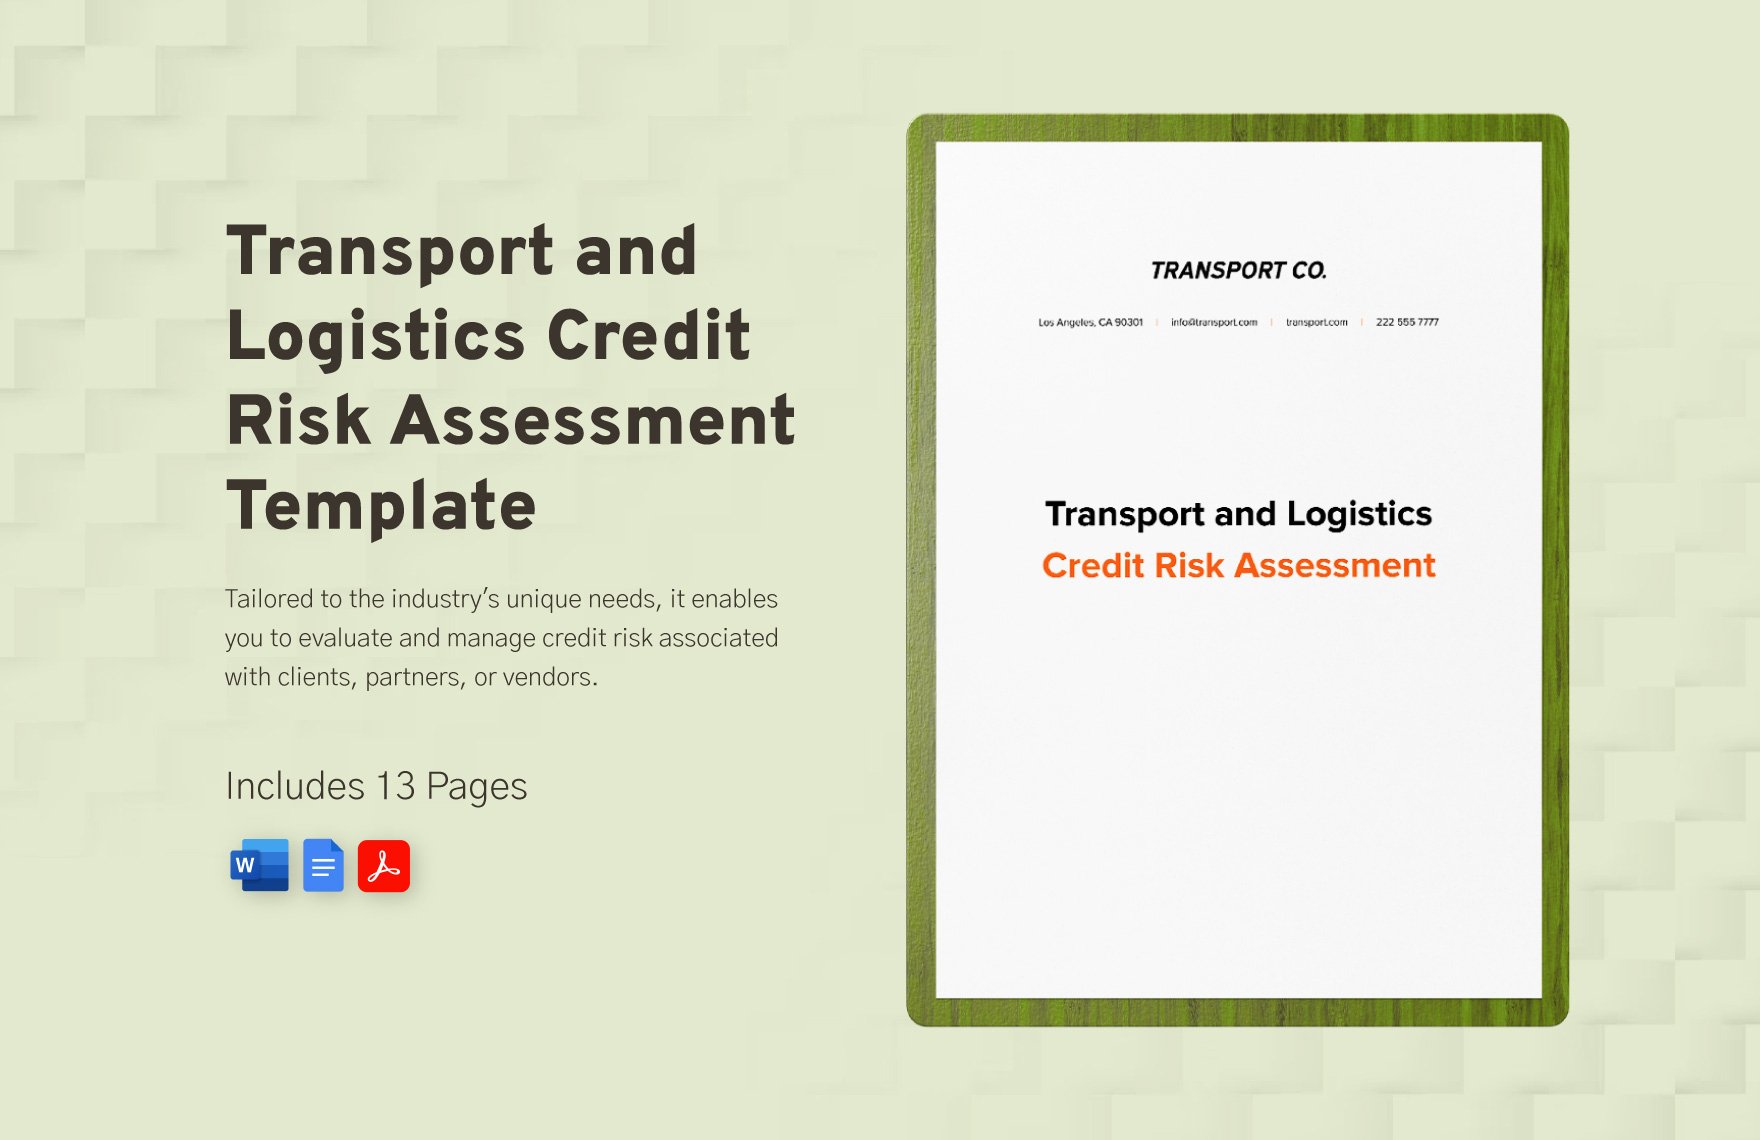 Transport and Logistics Credit Risk Assessment Template